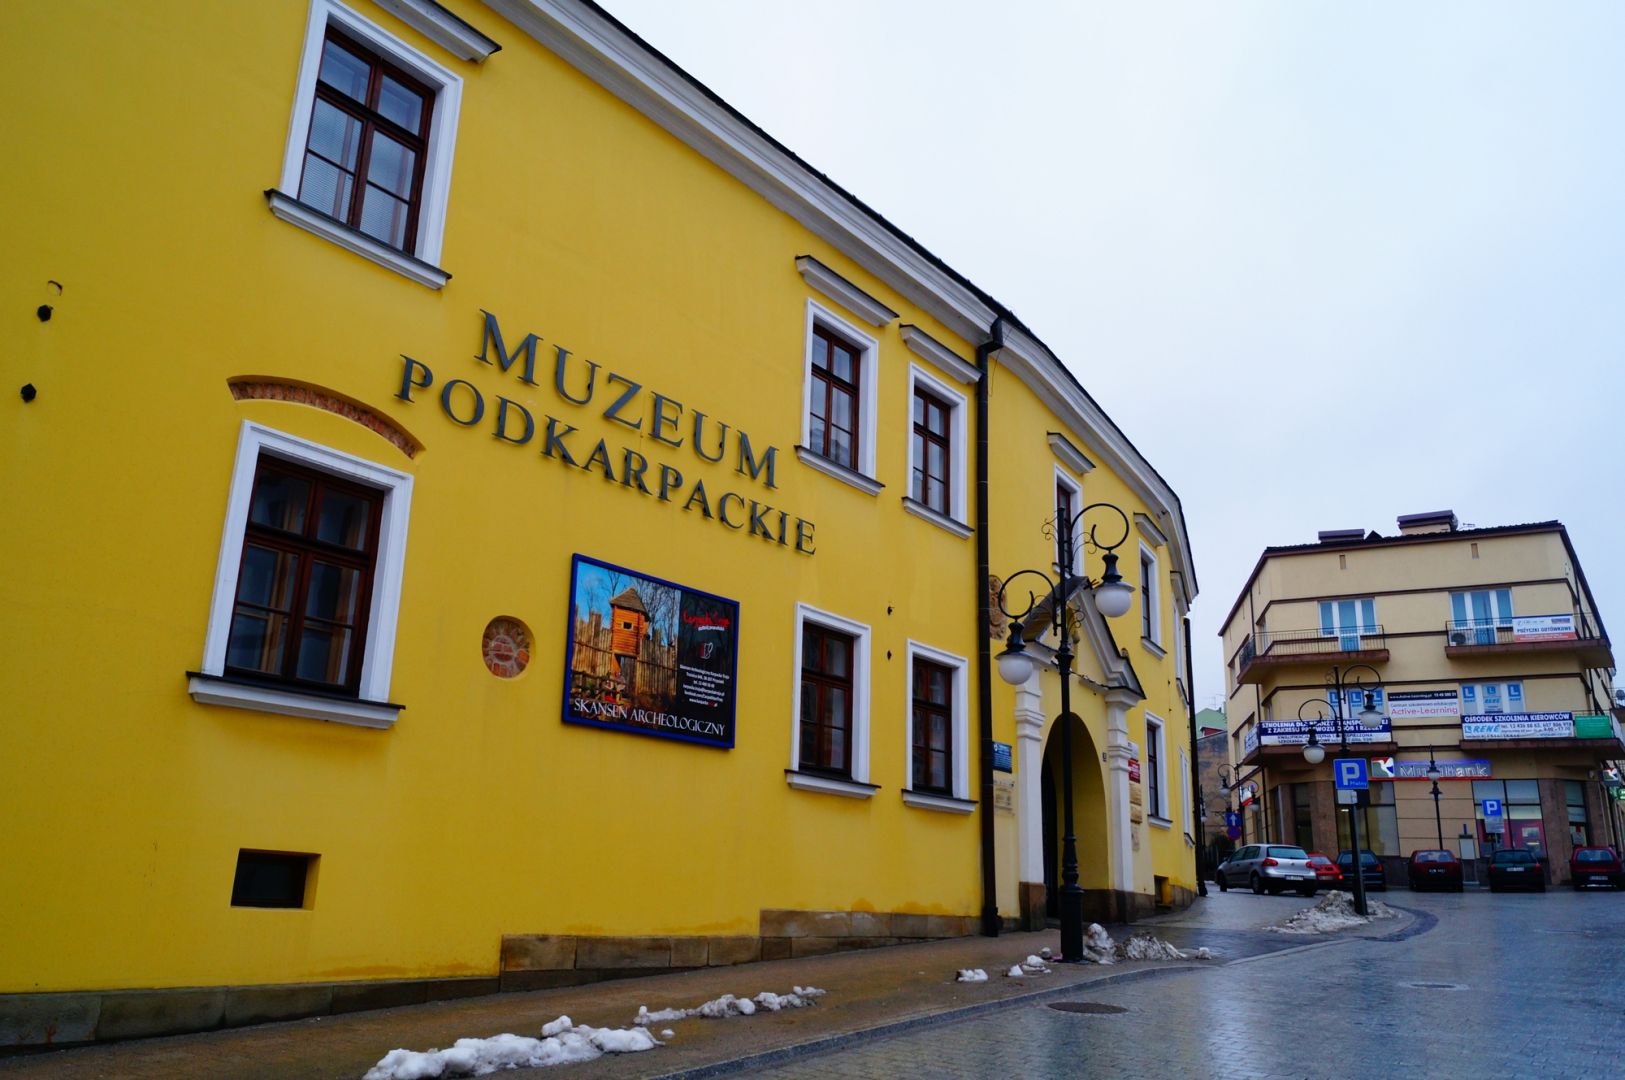 Muzeum Podkarpackie